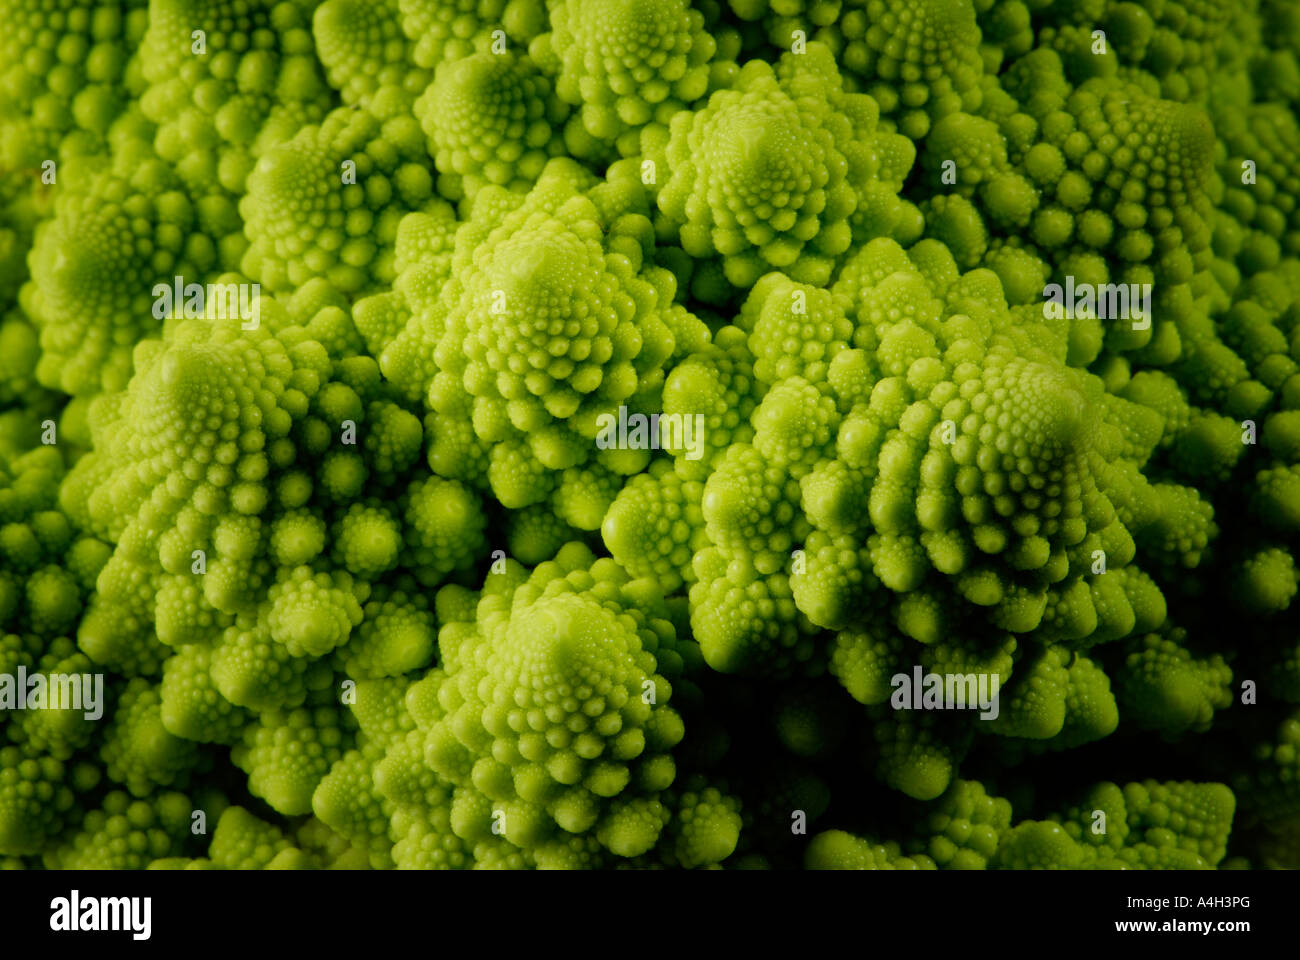 Romanescu in detail (Brassica Oleracea) Stock Photo